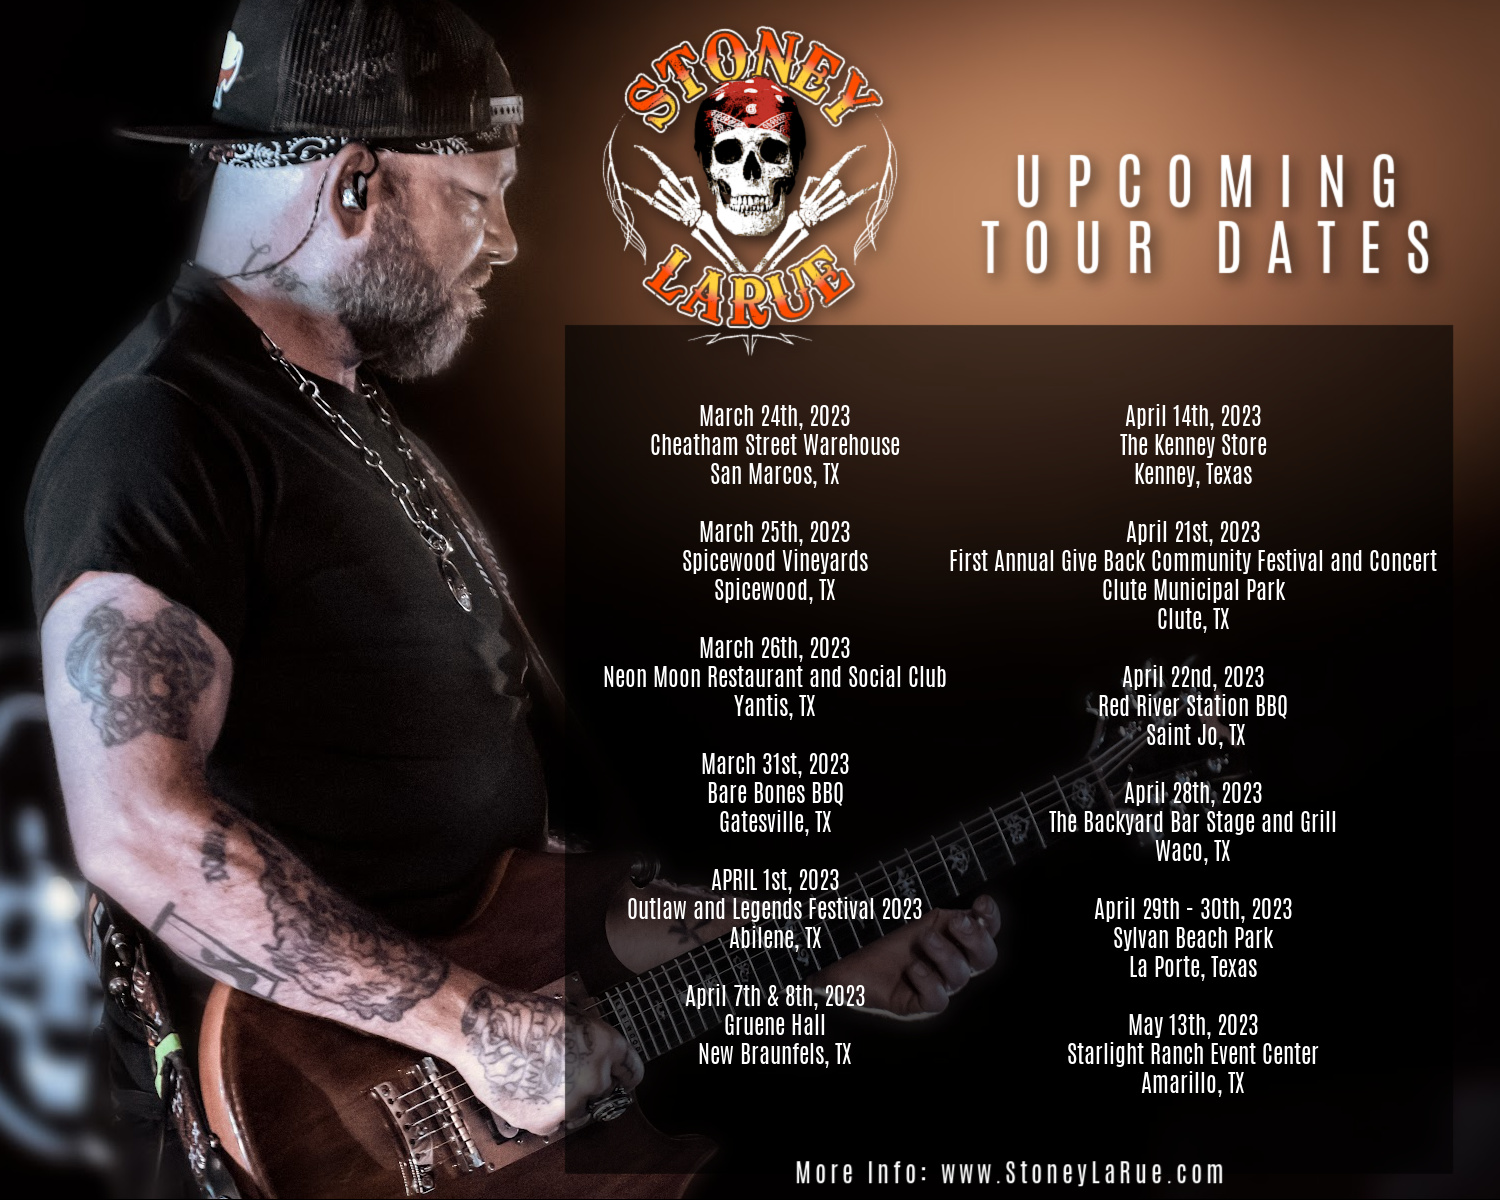 Check out these Stoney LaRue tour dates! Stoney LaRue